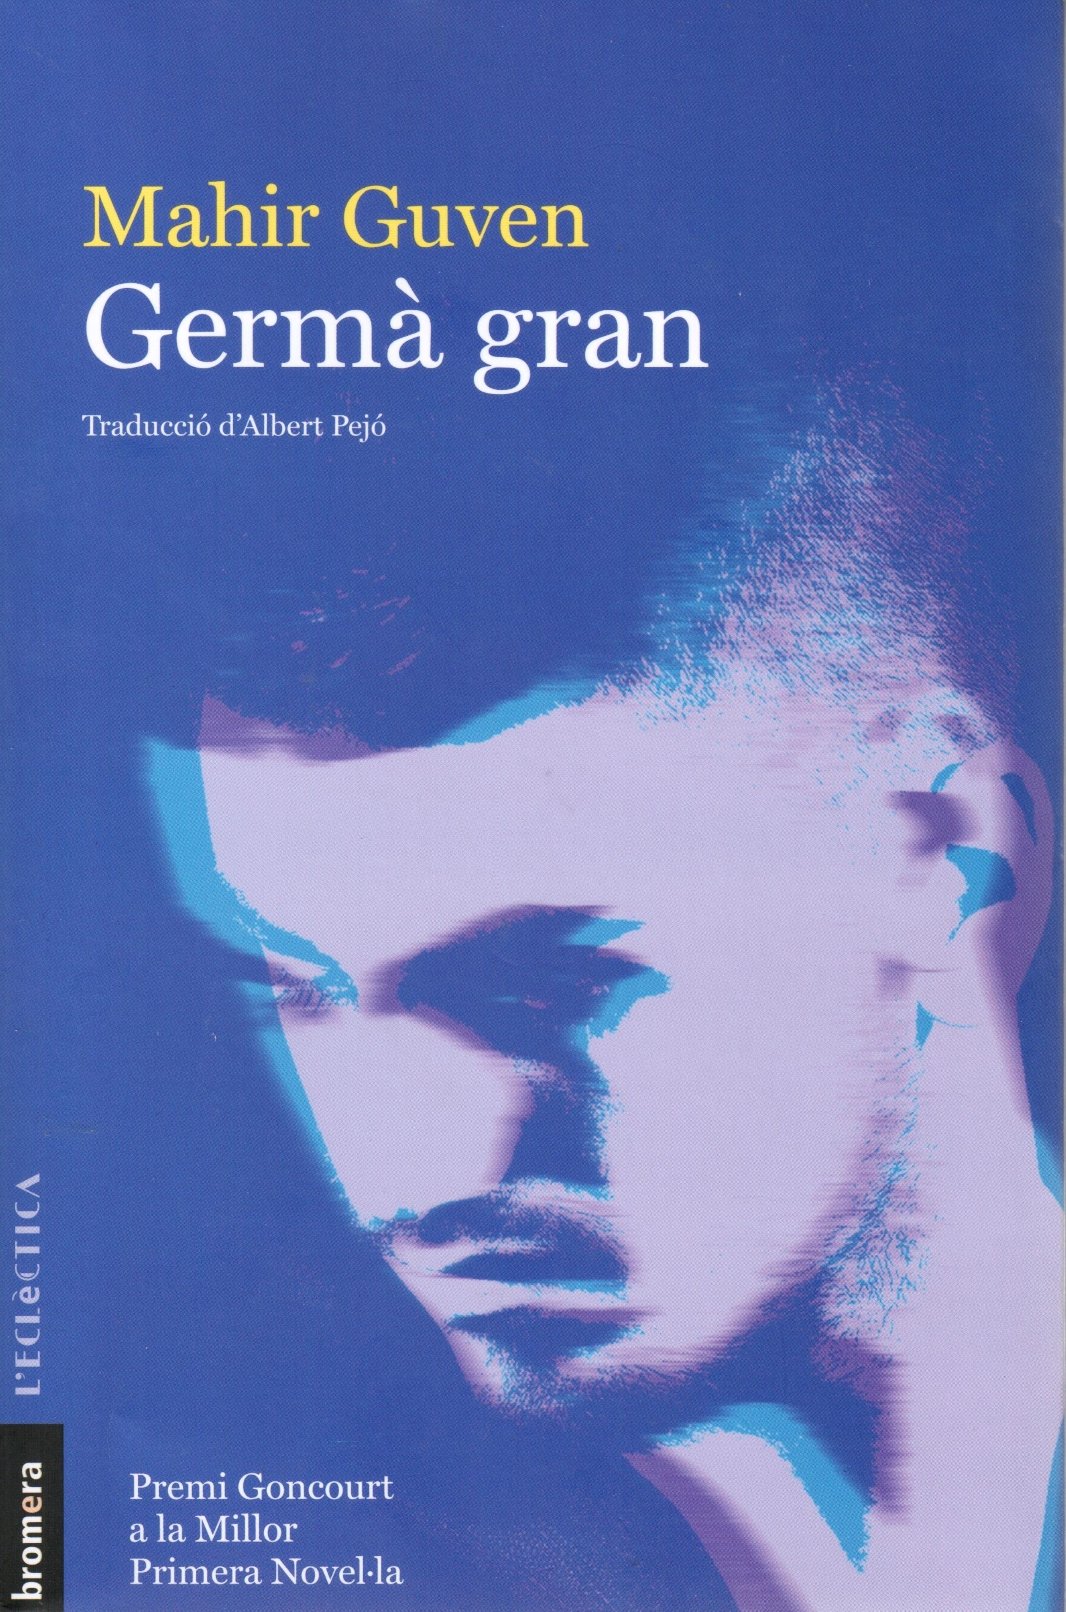 Mahir Guven, 'Germà gran'. Bromera, 246 p., 20 € (ed. castellana: Navona ed.).